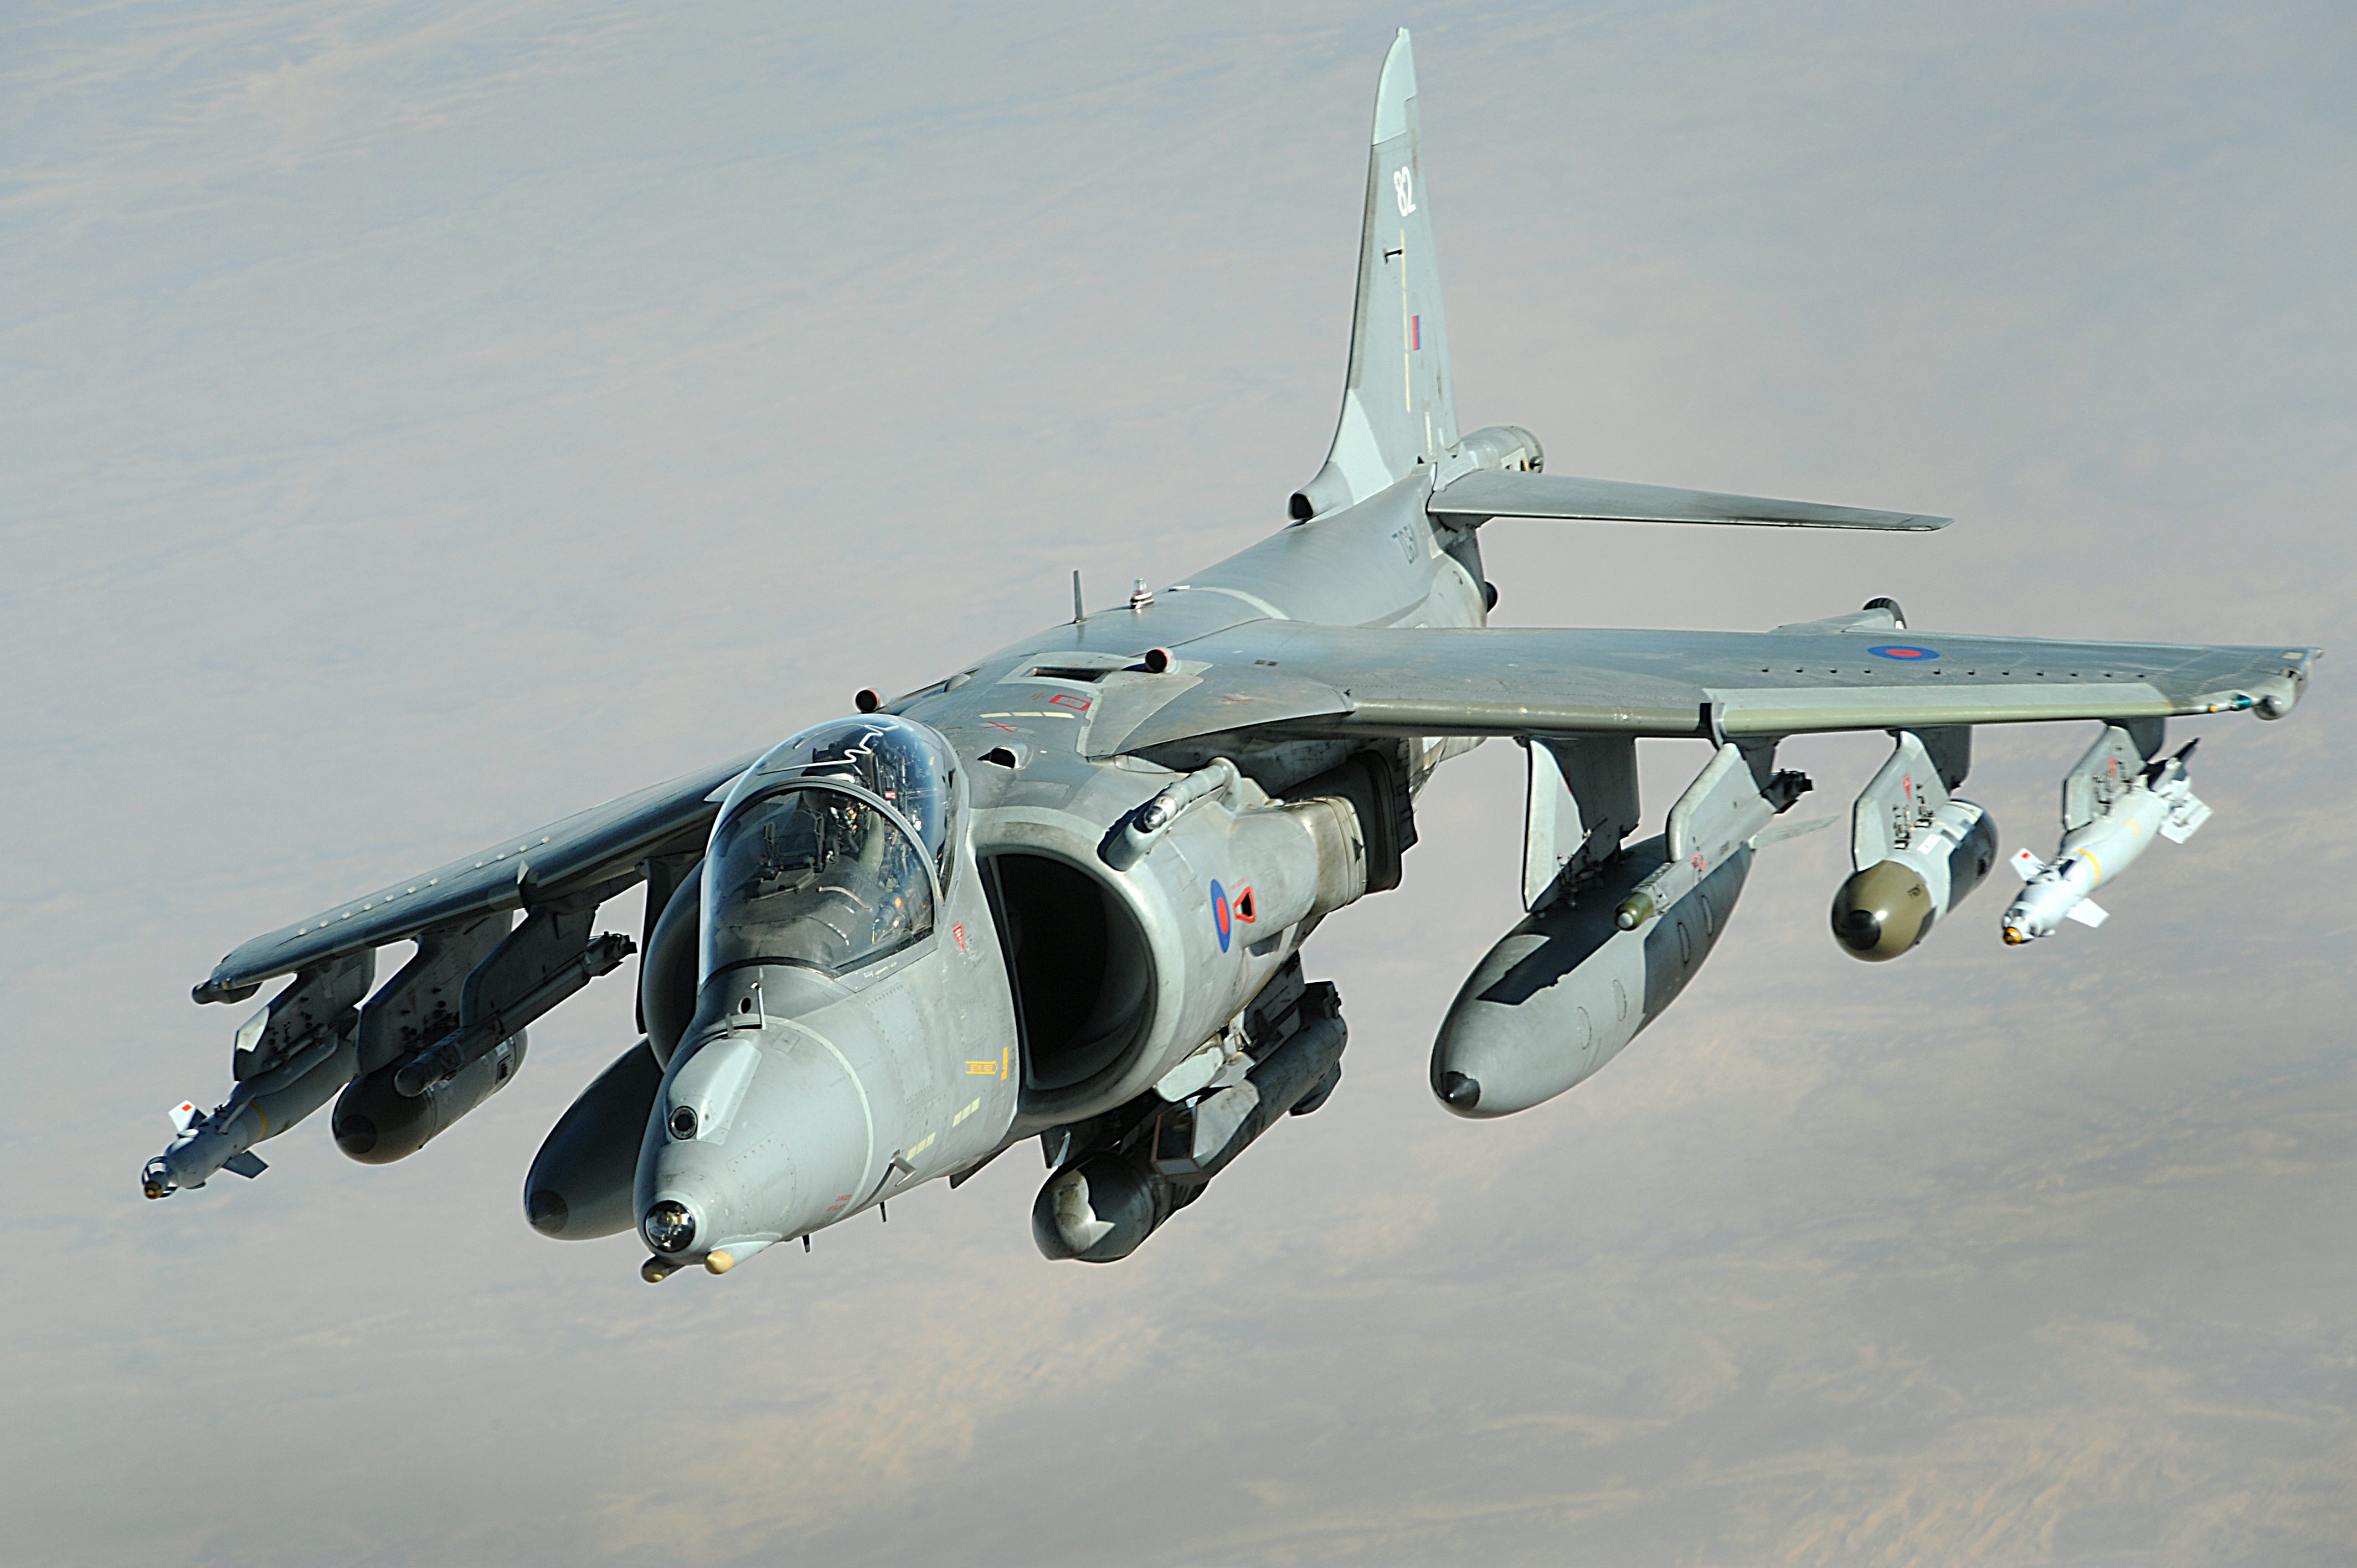 British Aerospace Sea Harrier Backgrounds, Compatible - PC, Mobile, Gadgets| 4256x2832 px